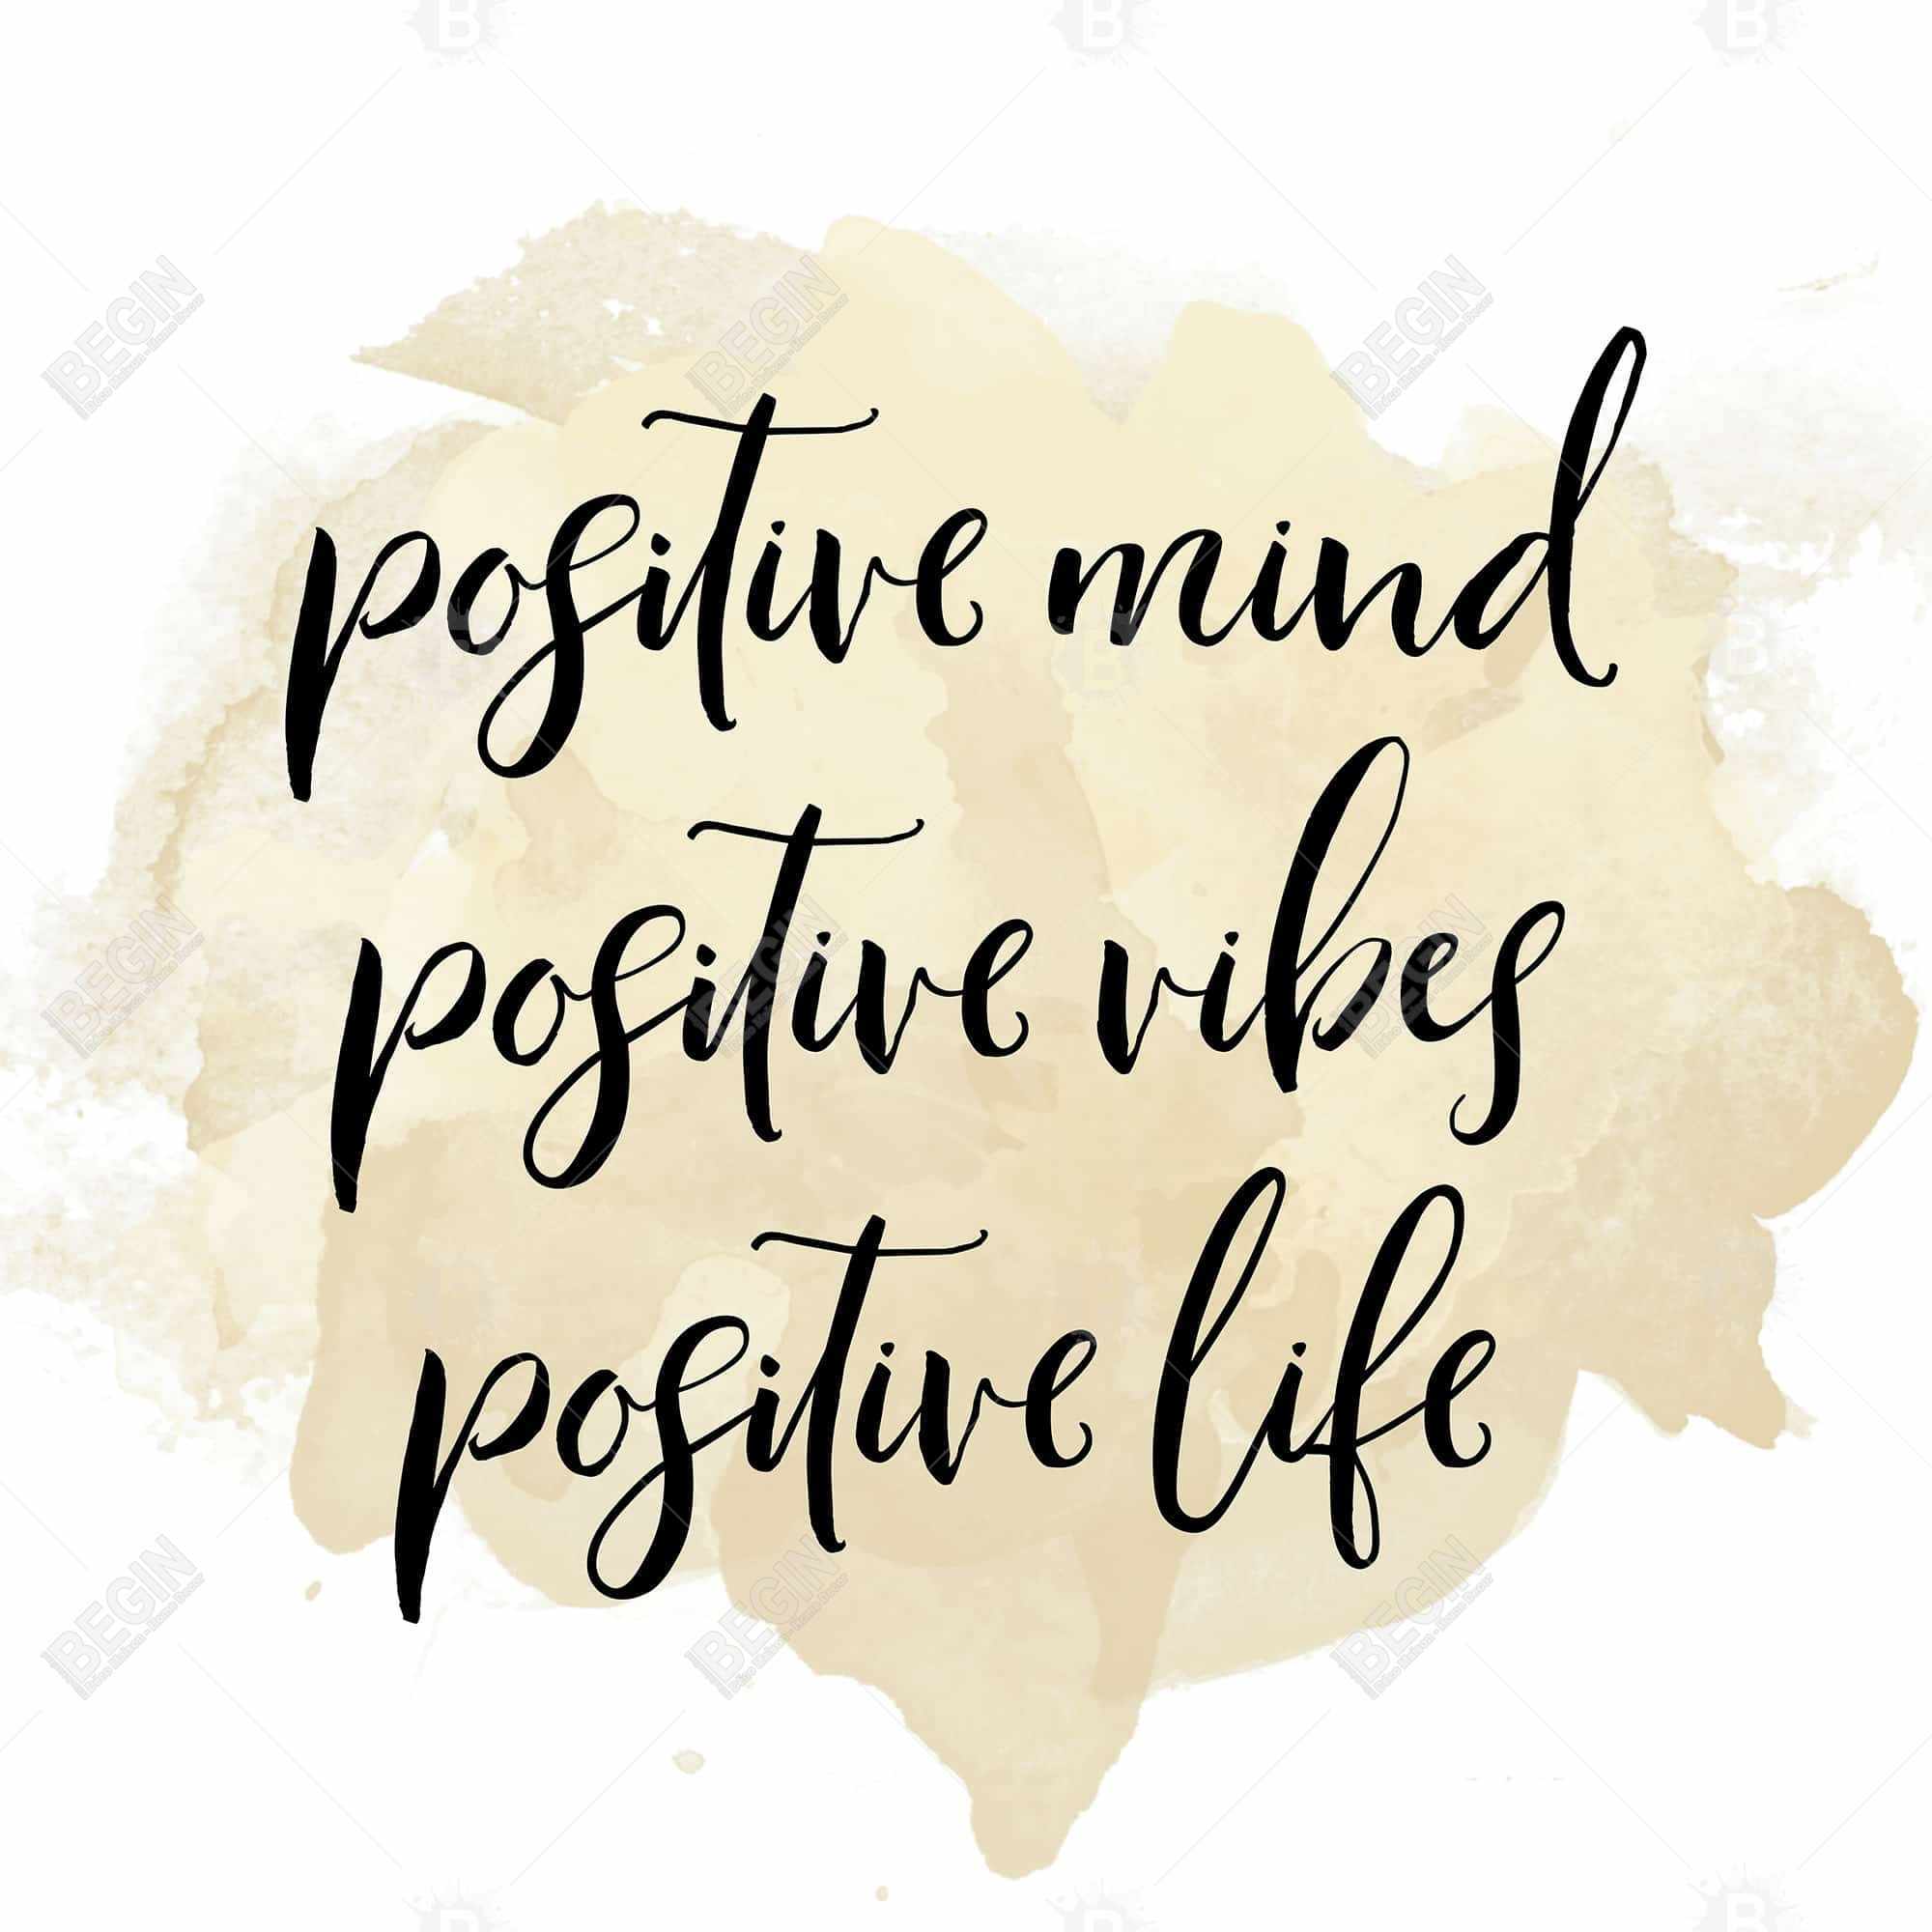 Positive mind positive vibes...